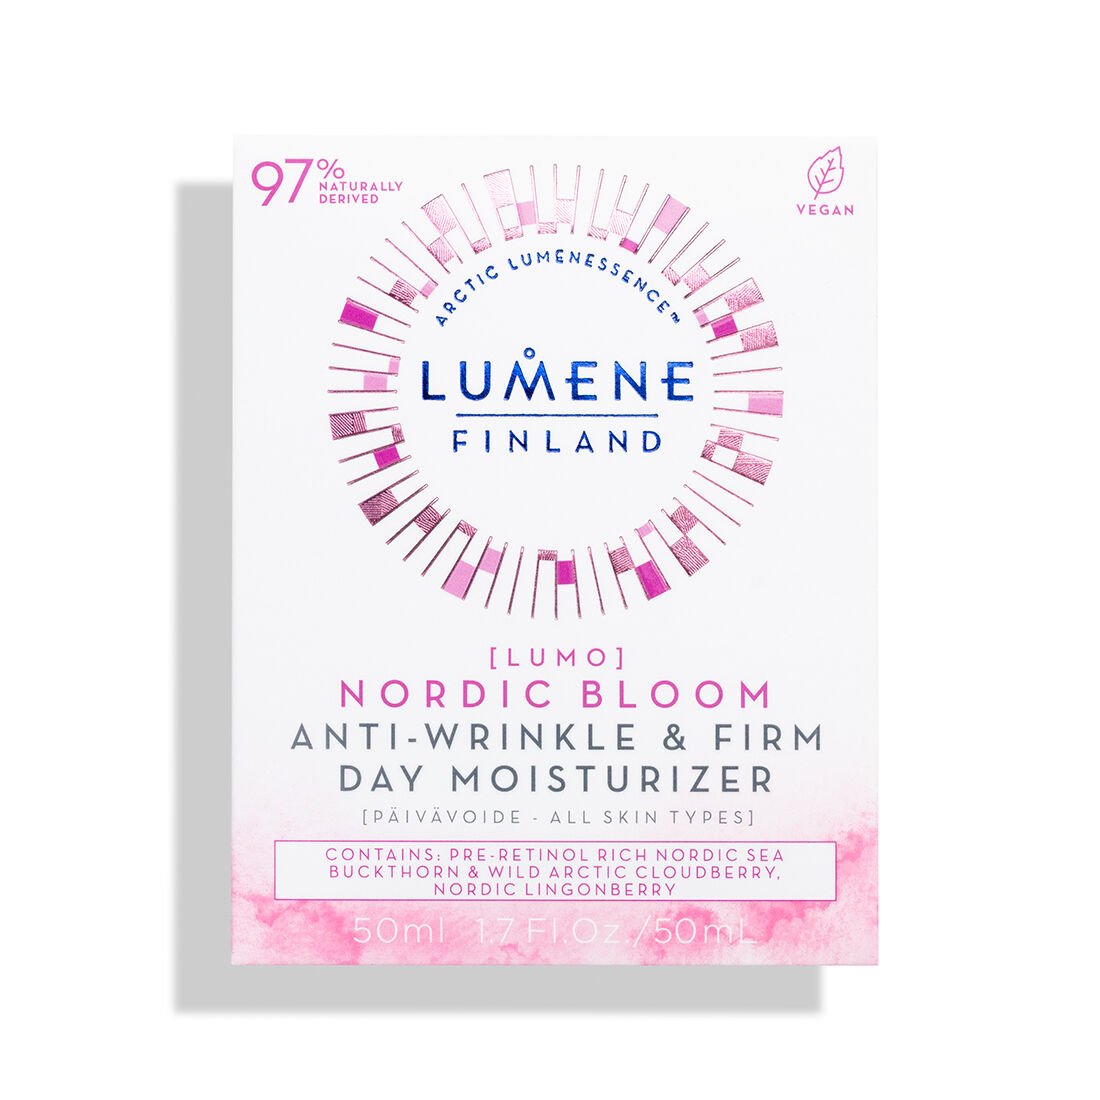 Lumene Lumo Nordic Bloom Anti-Wrinkle & Firm Day Moisturizer 50 ml